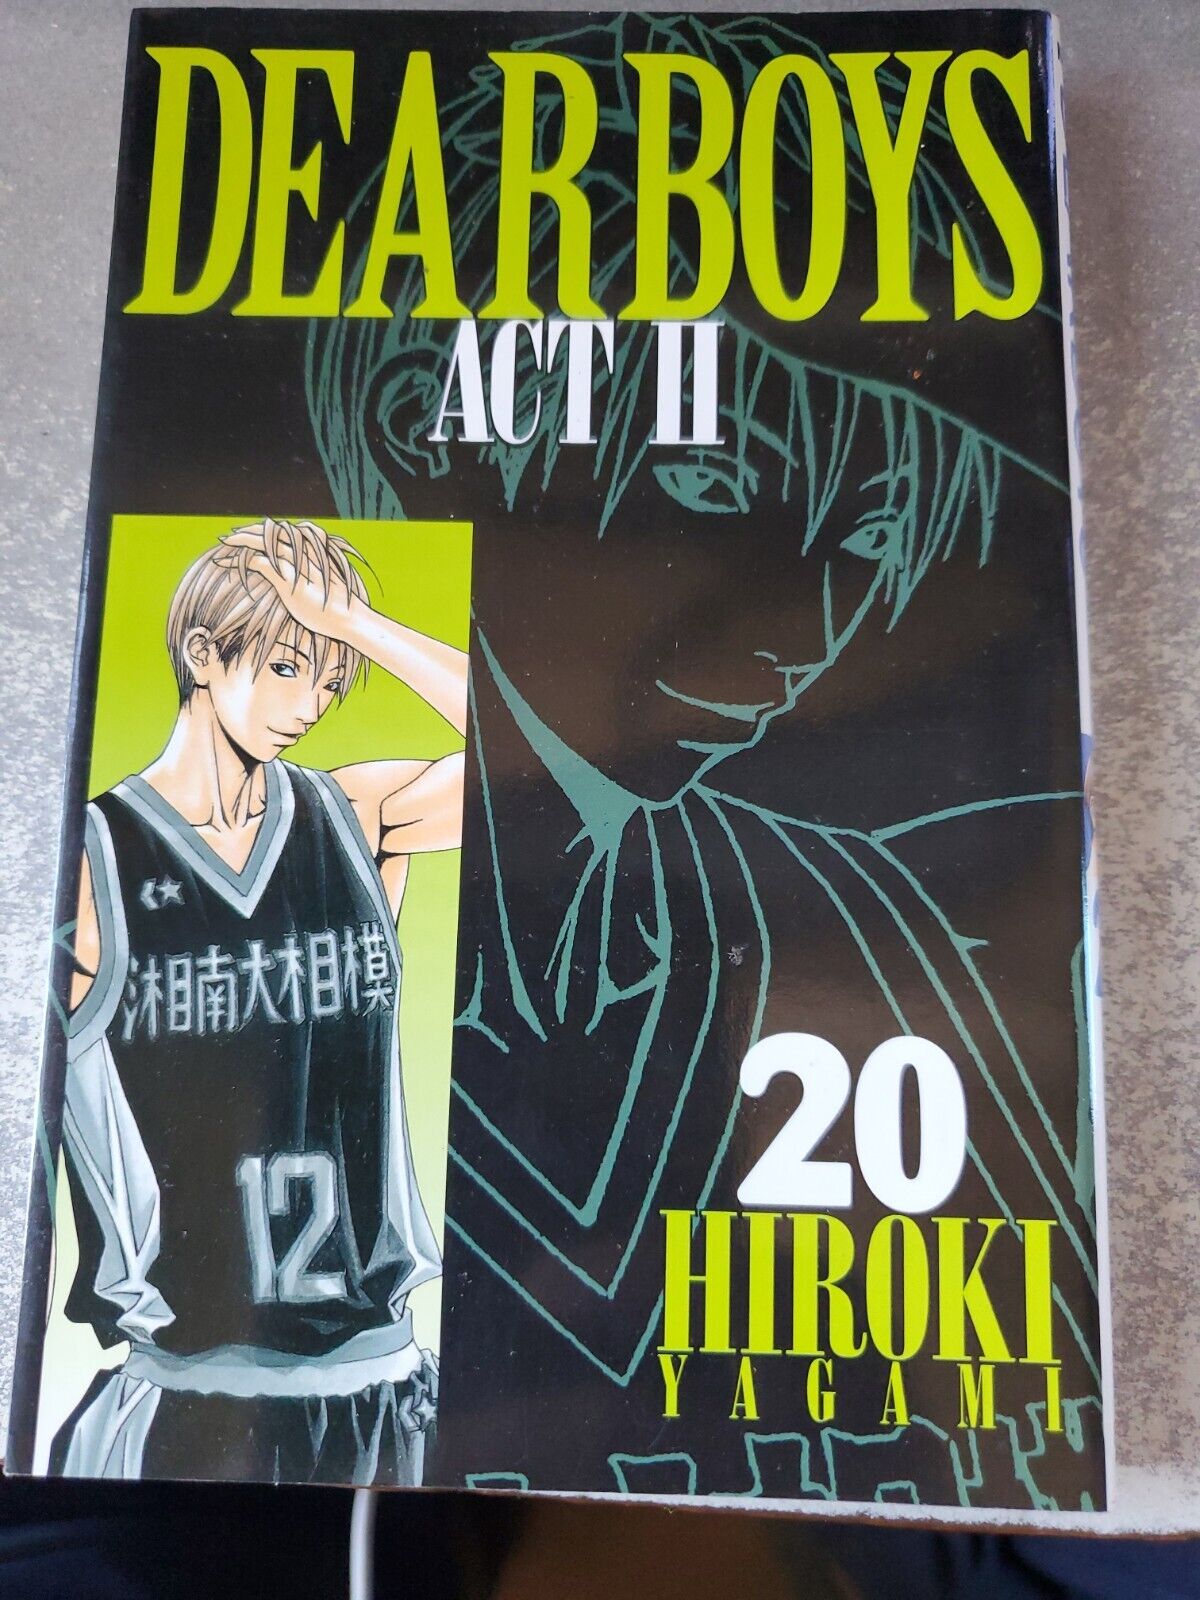 Japanese Manga Kodansha Gekkan Magazine KC Hiroki Yagami DEAR BOYS ACTII 20